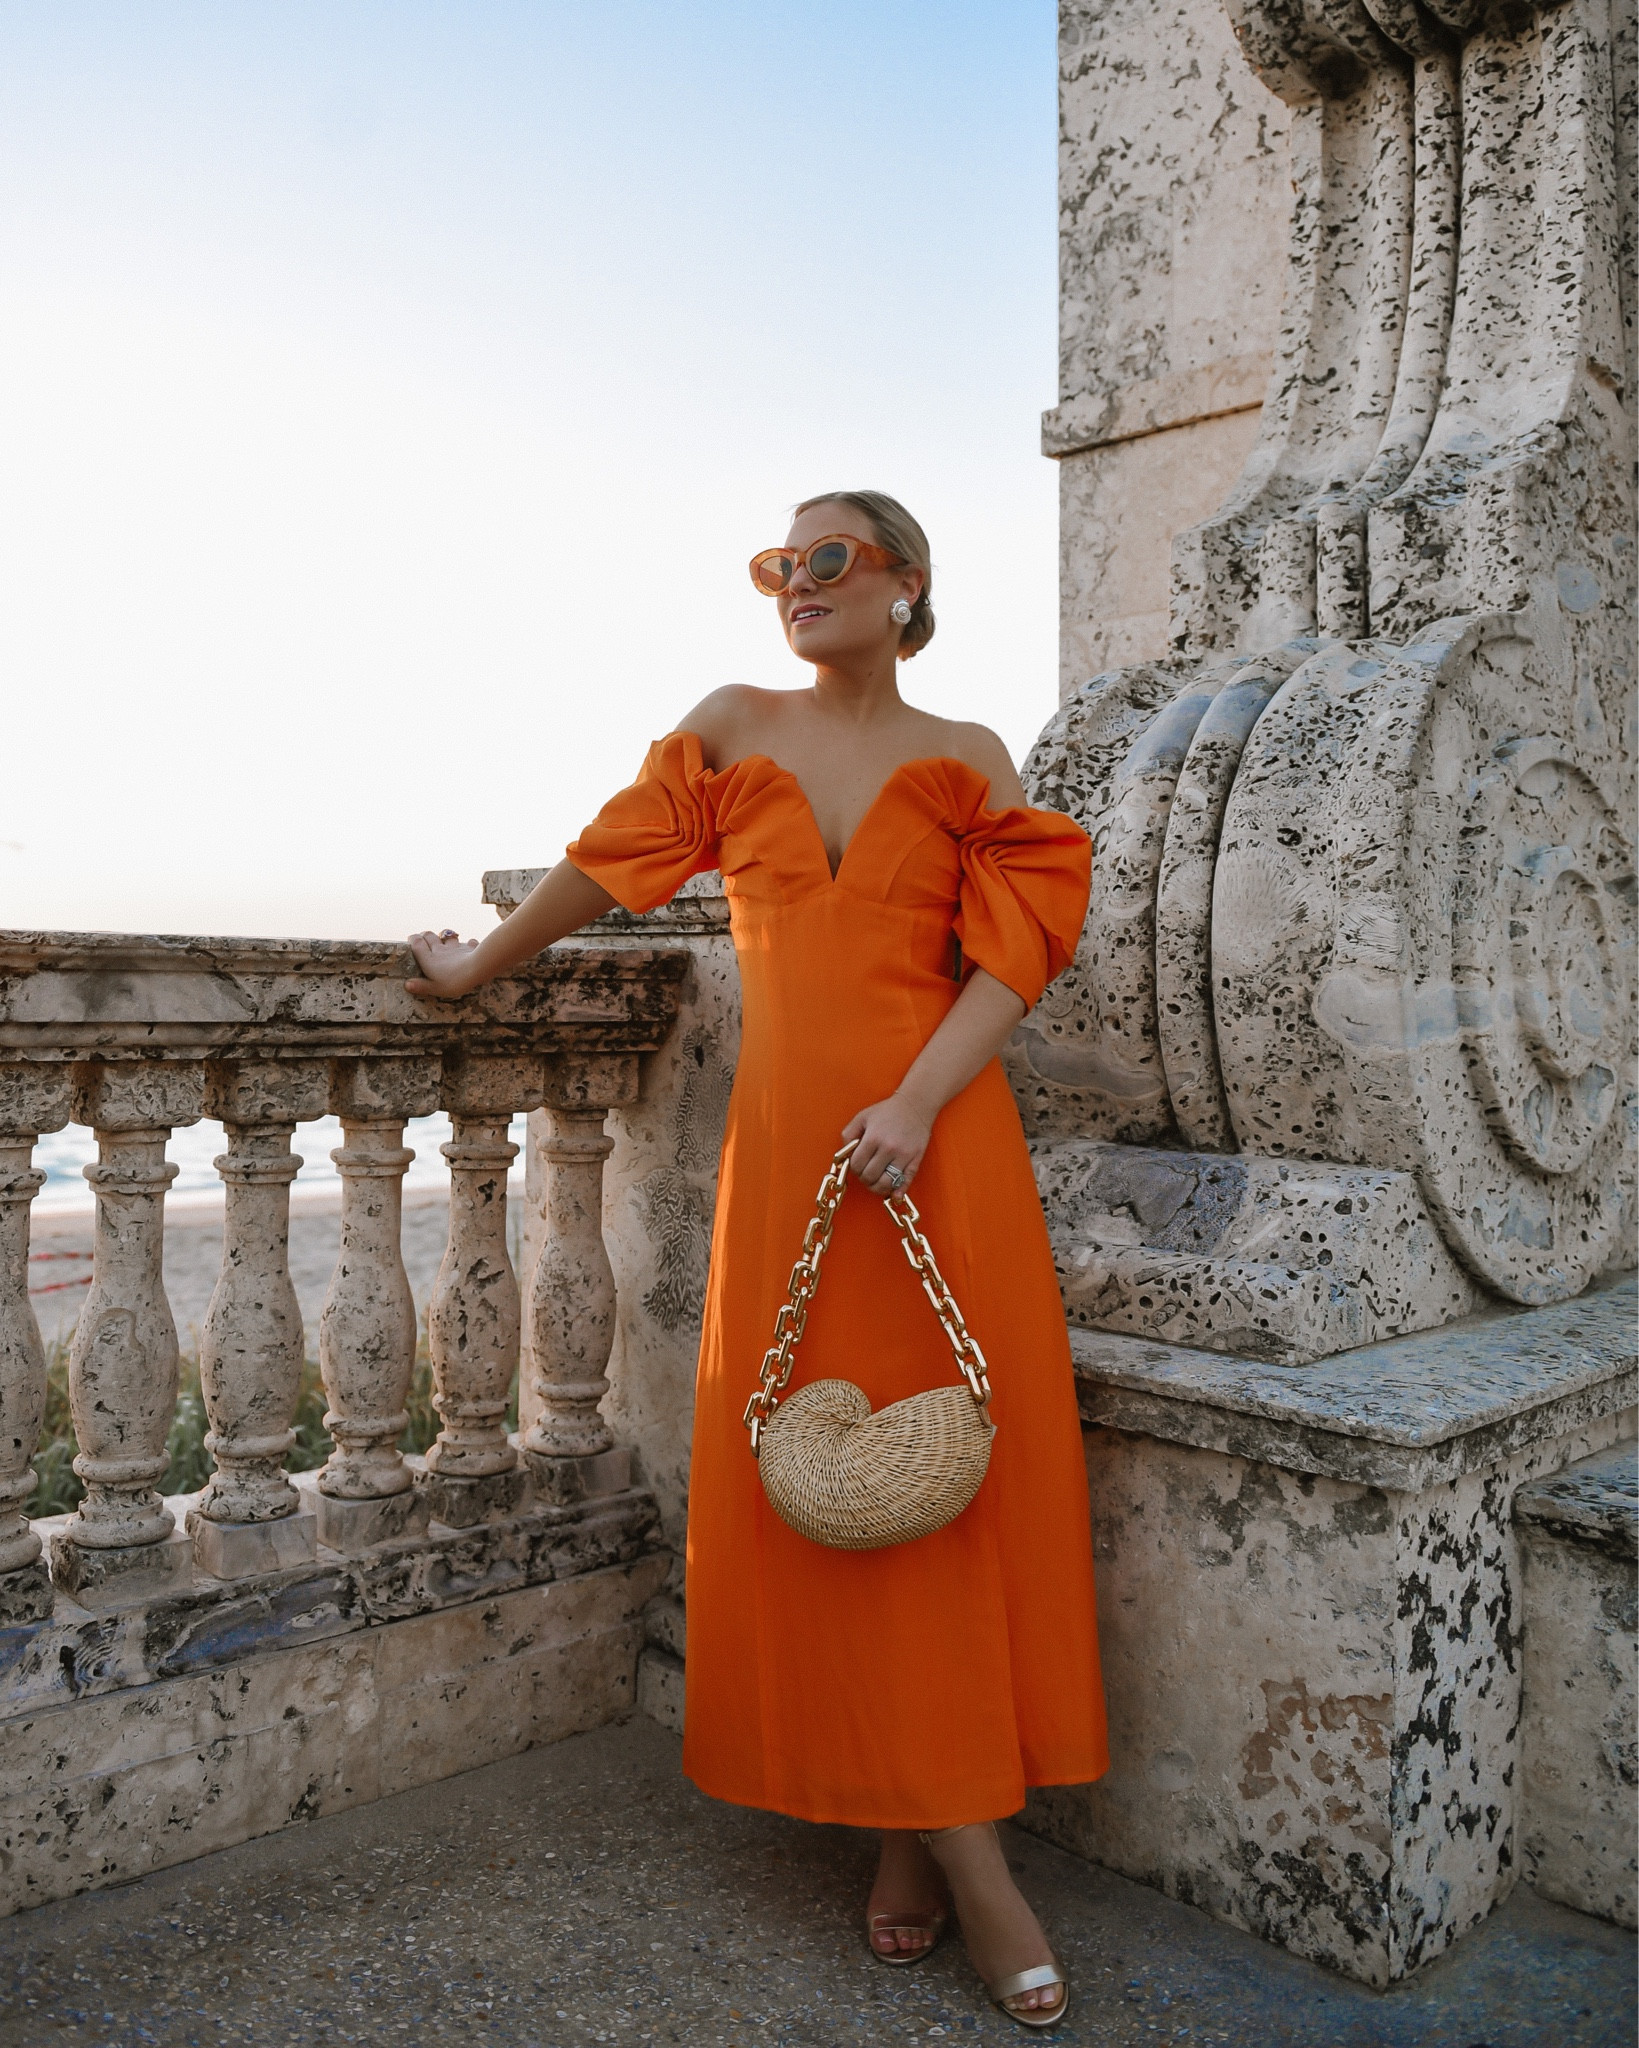 cult gaia orange dress